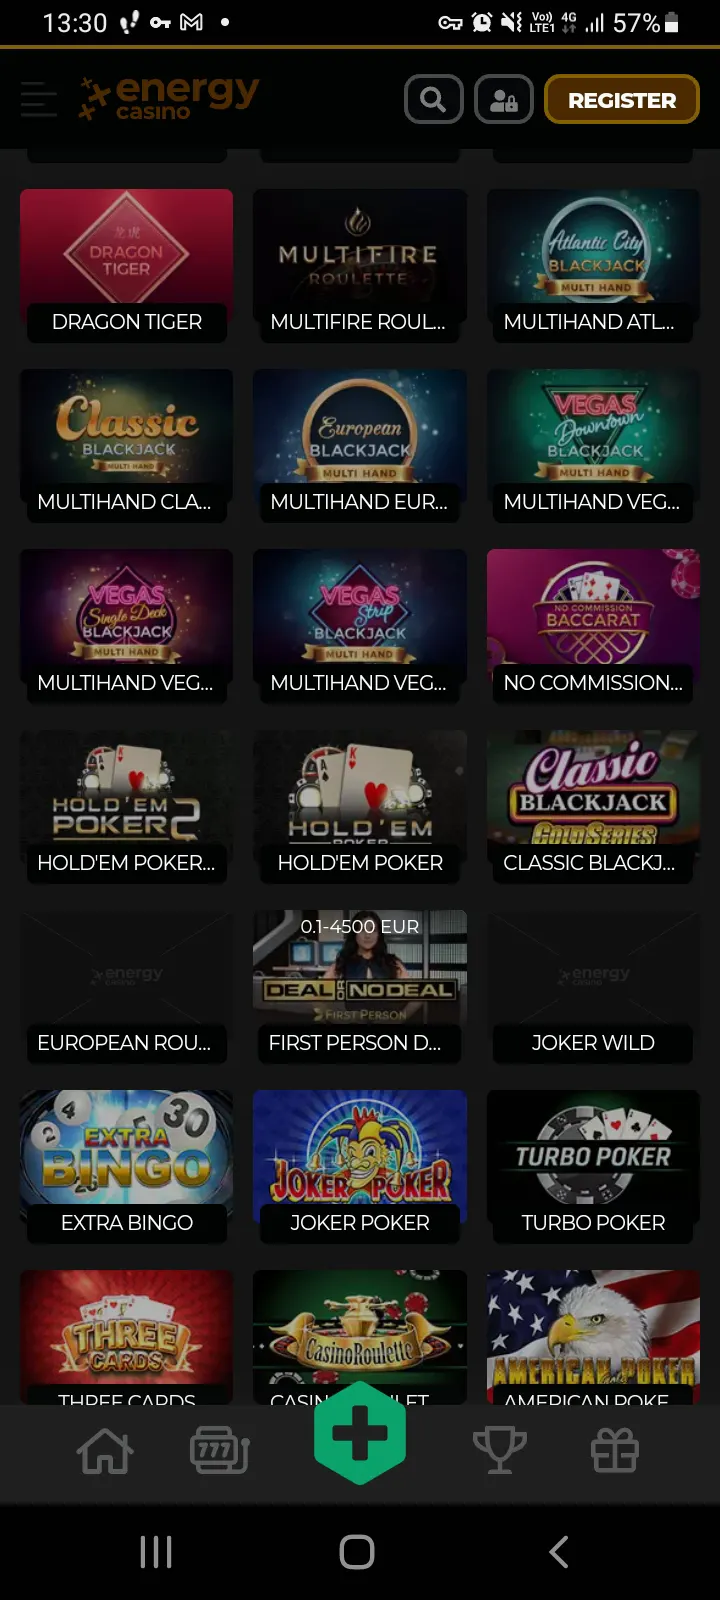 Energy casino app screenshot 3